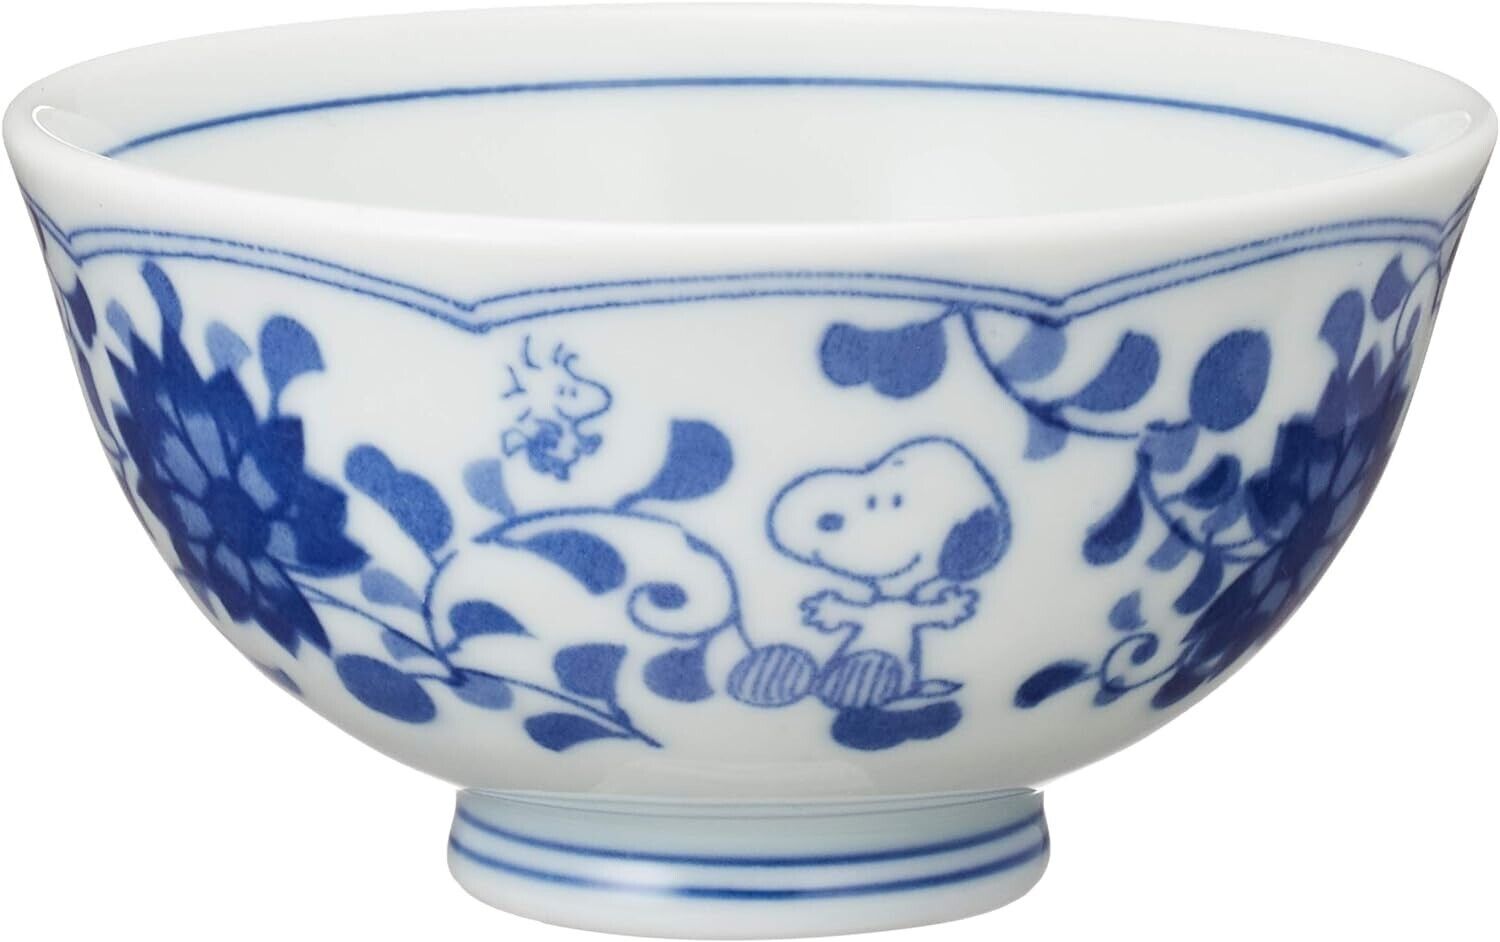 Peanuts Snoopy  Rice Bowl Indigo Arabesque Pattern from Japan